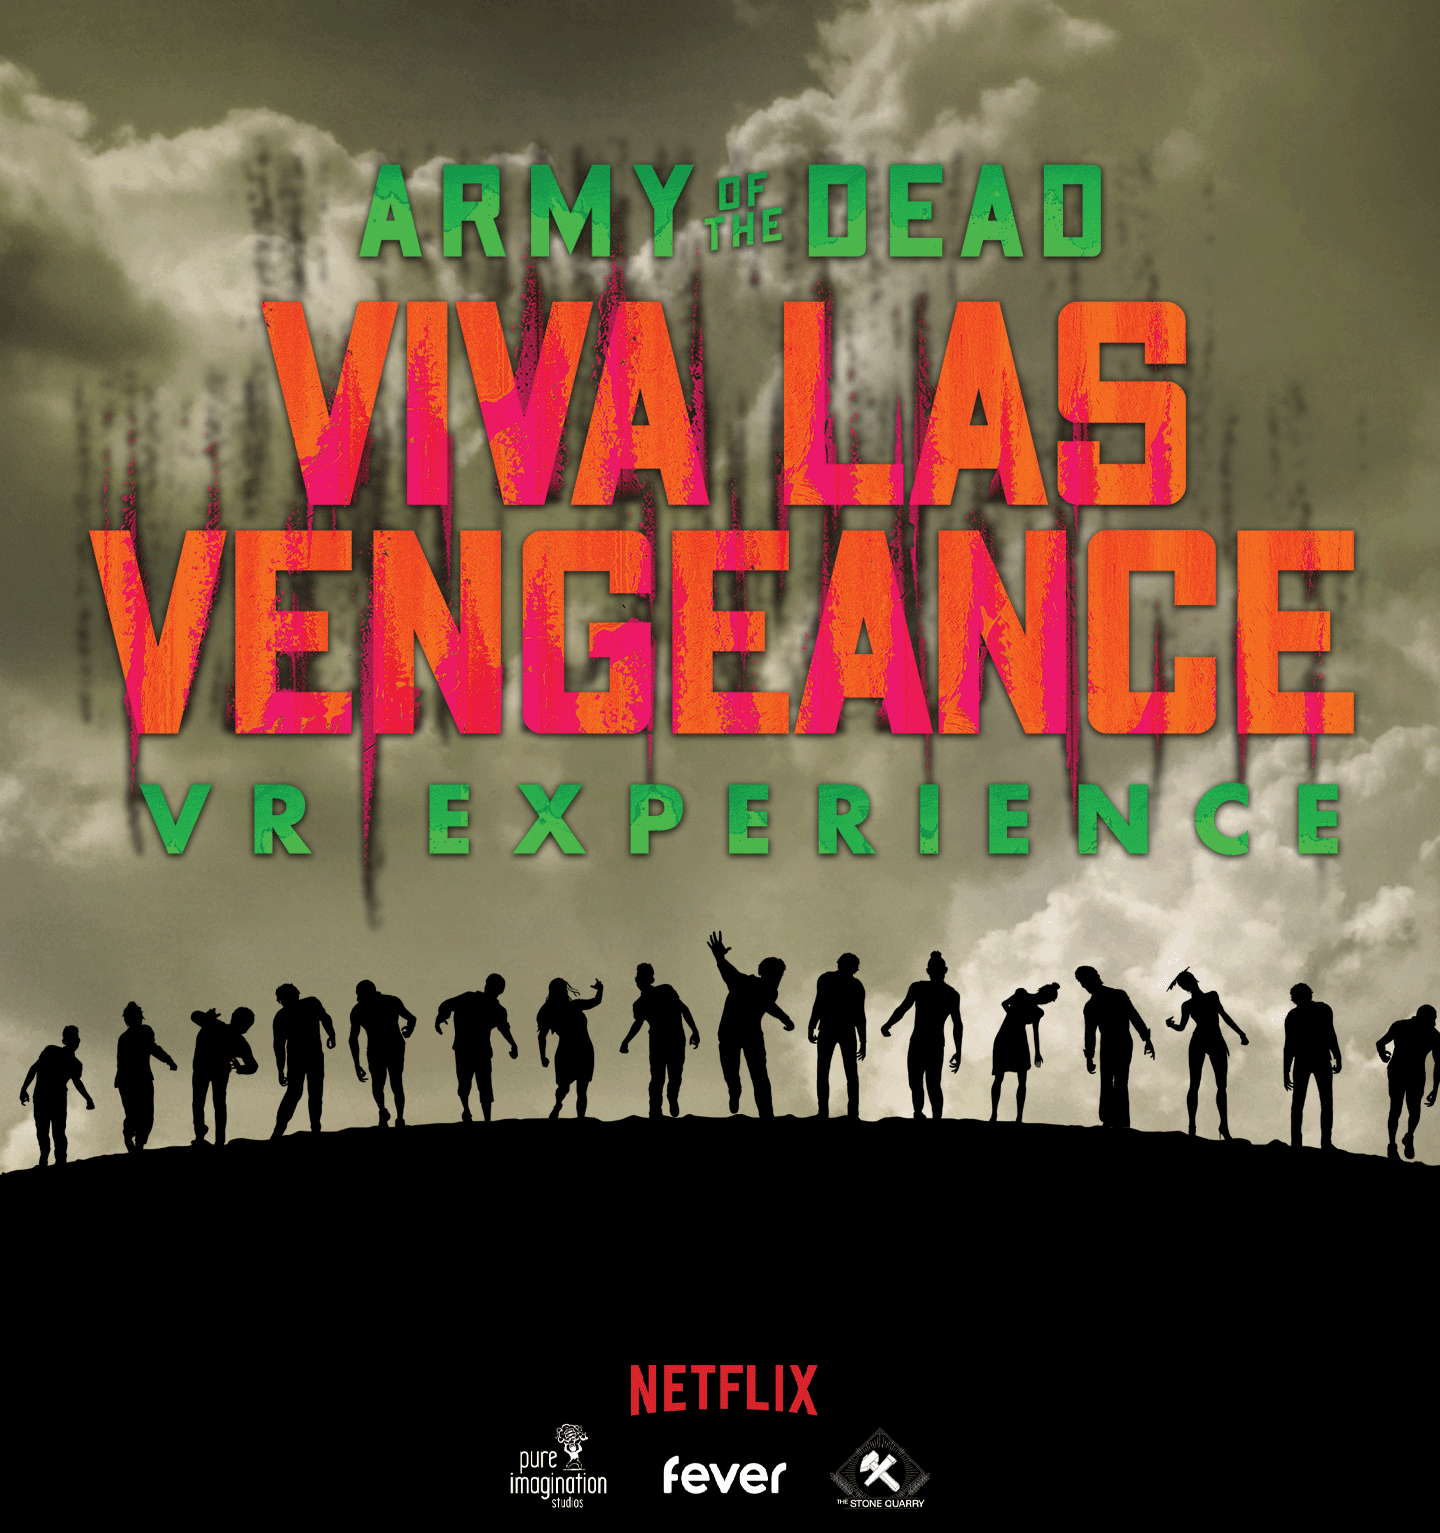 Viva Las Vengeance: A VR Experience